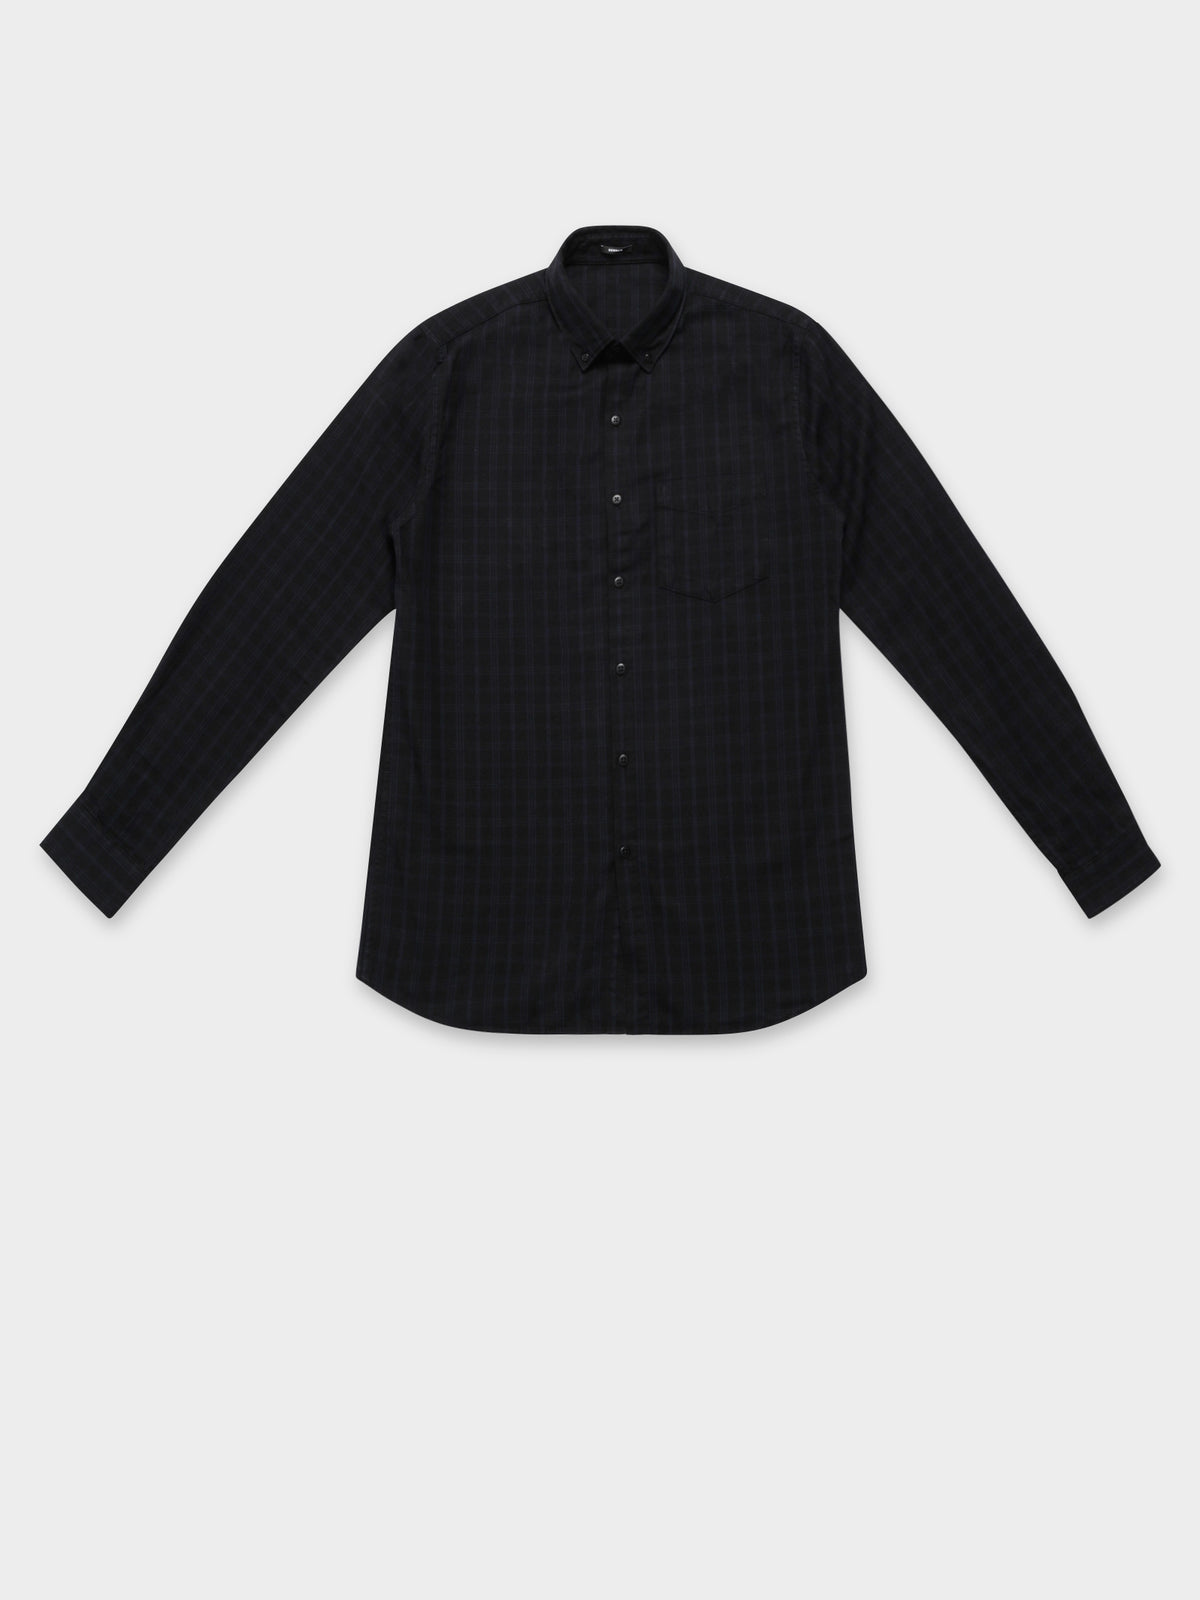 Pocket Shirt in Black